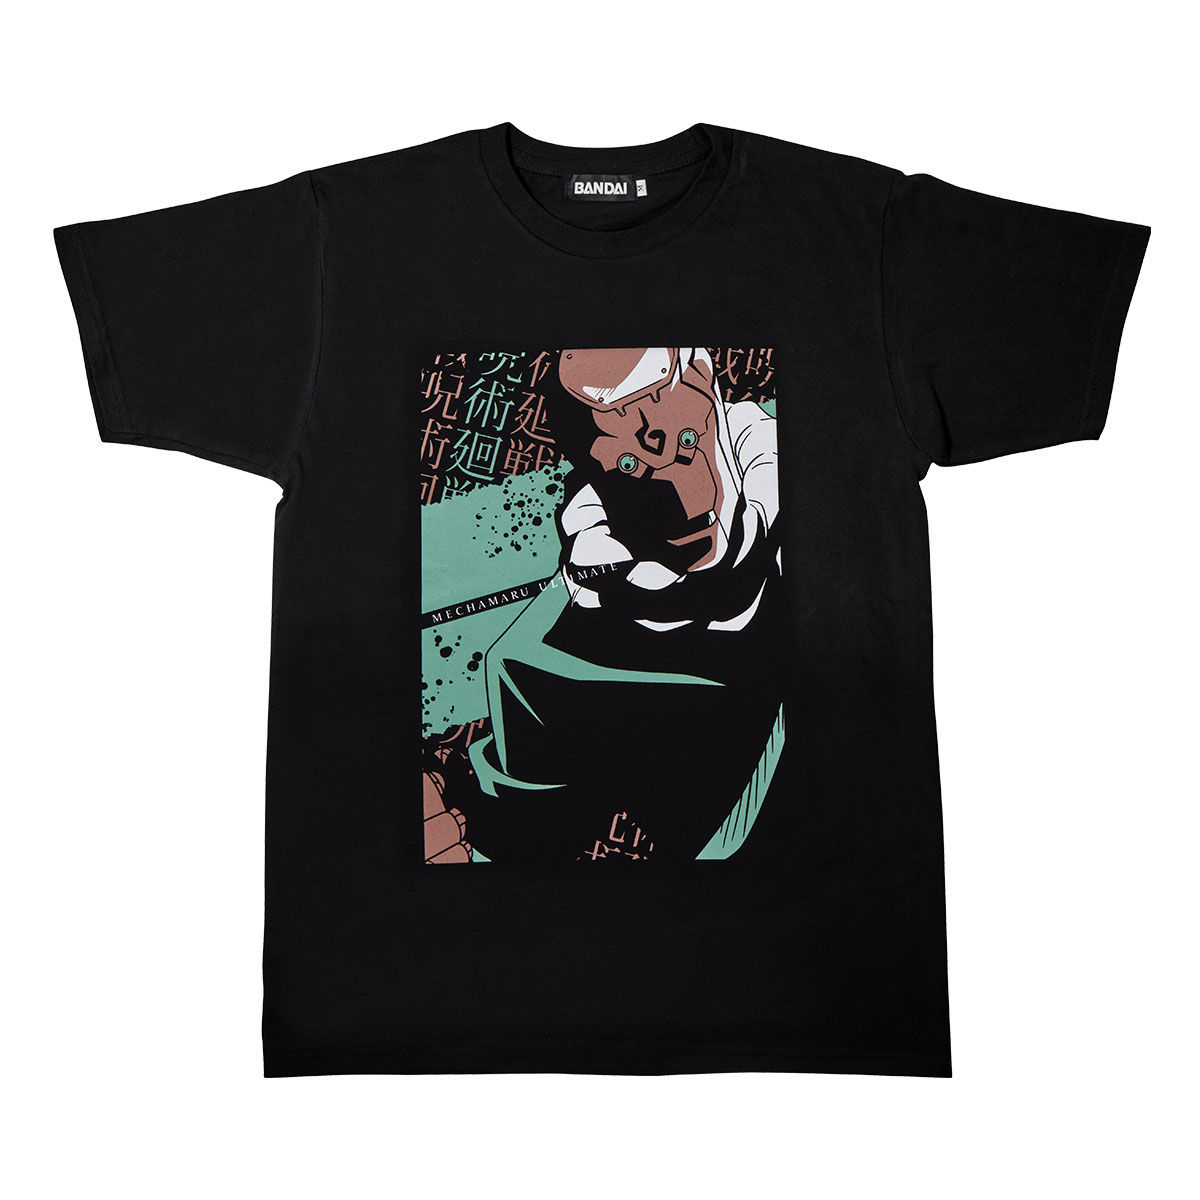 Jujutsu Kaisen T-shirt collection III